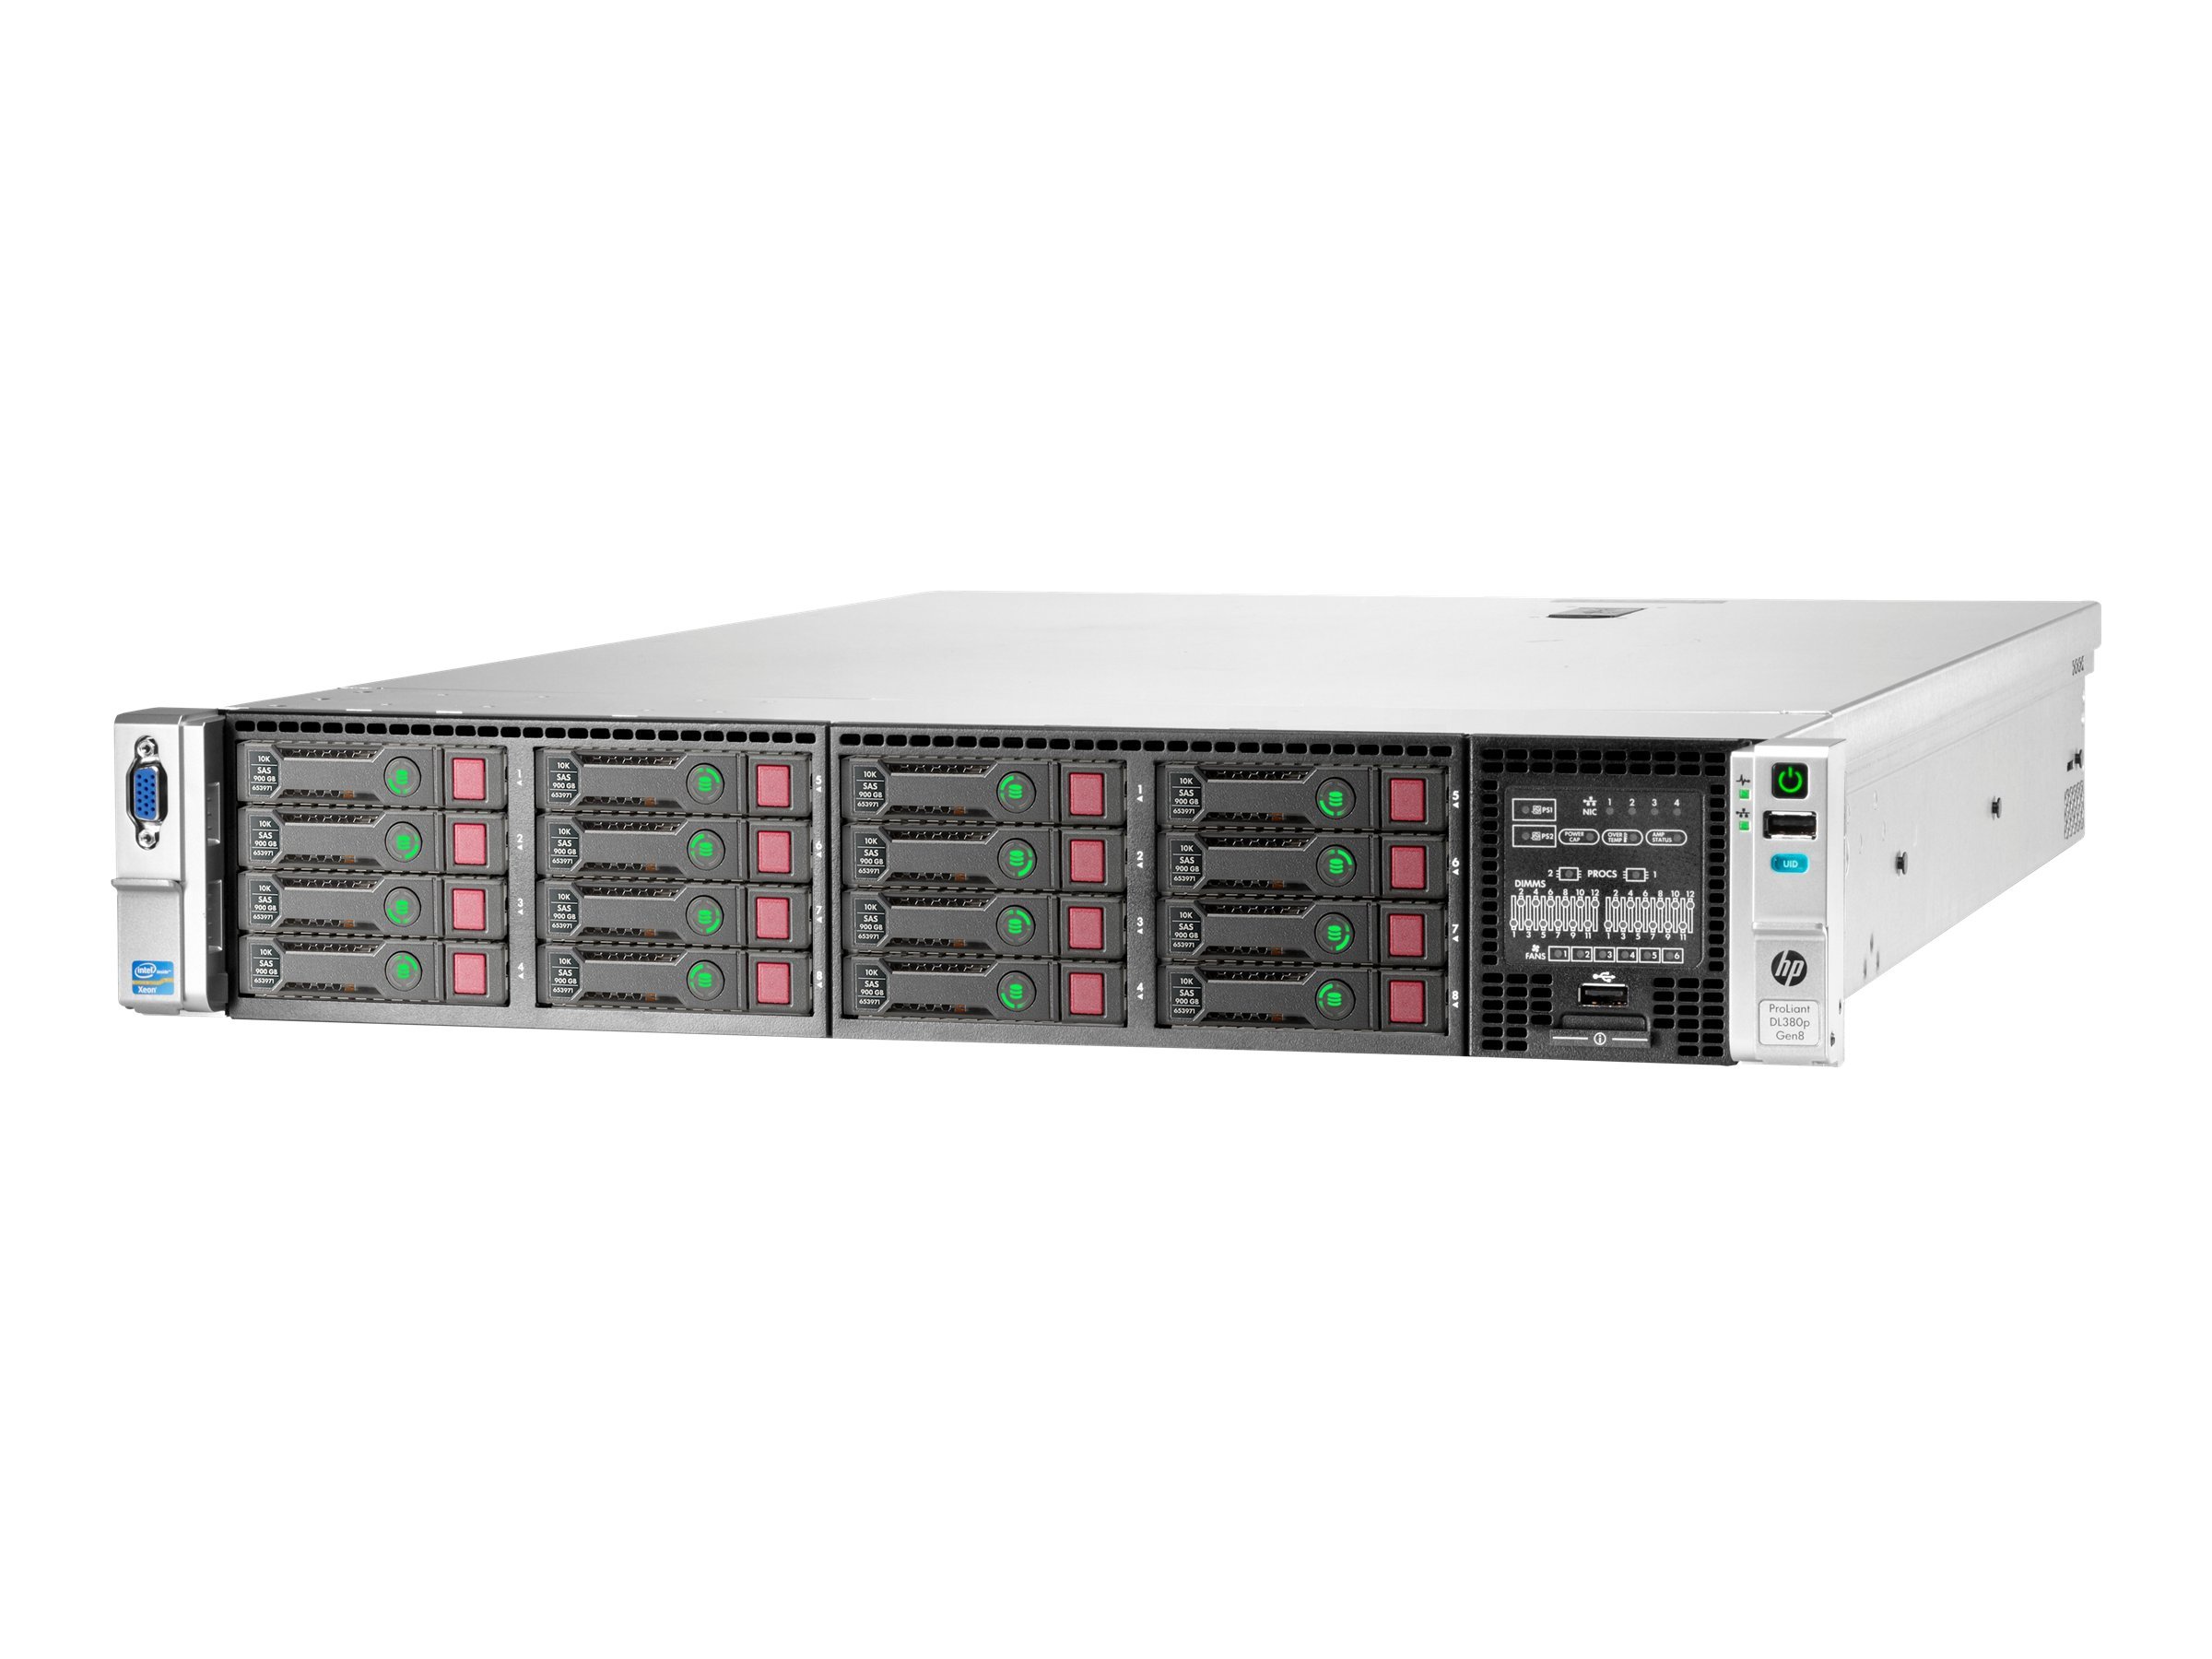 HPE ProLiant DL380p Gen8 High Performance - Server - Rack-Montage - 2U - zweiweg - 2 x Xeon E5-2665 / 2.4 GHz